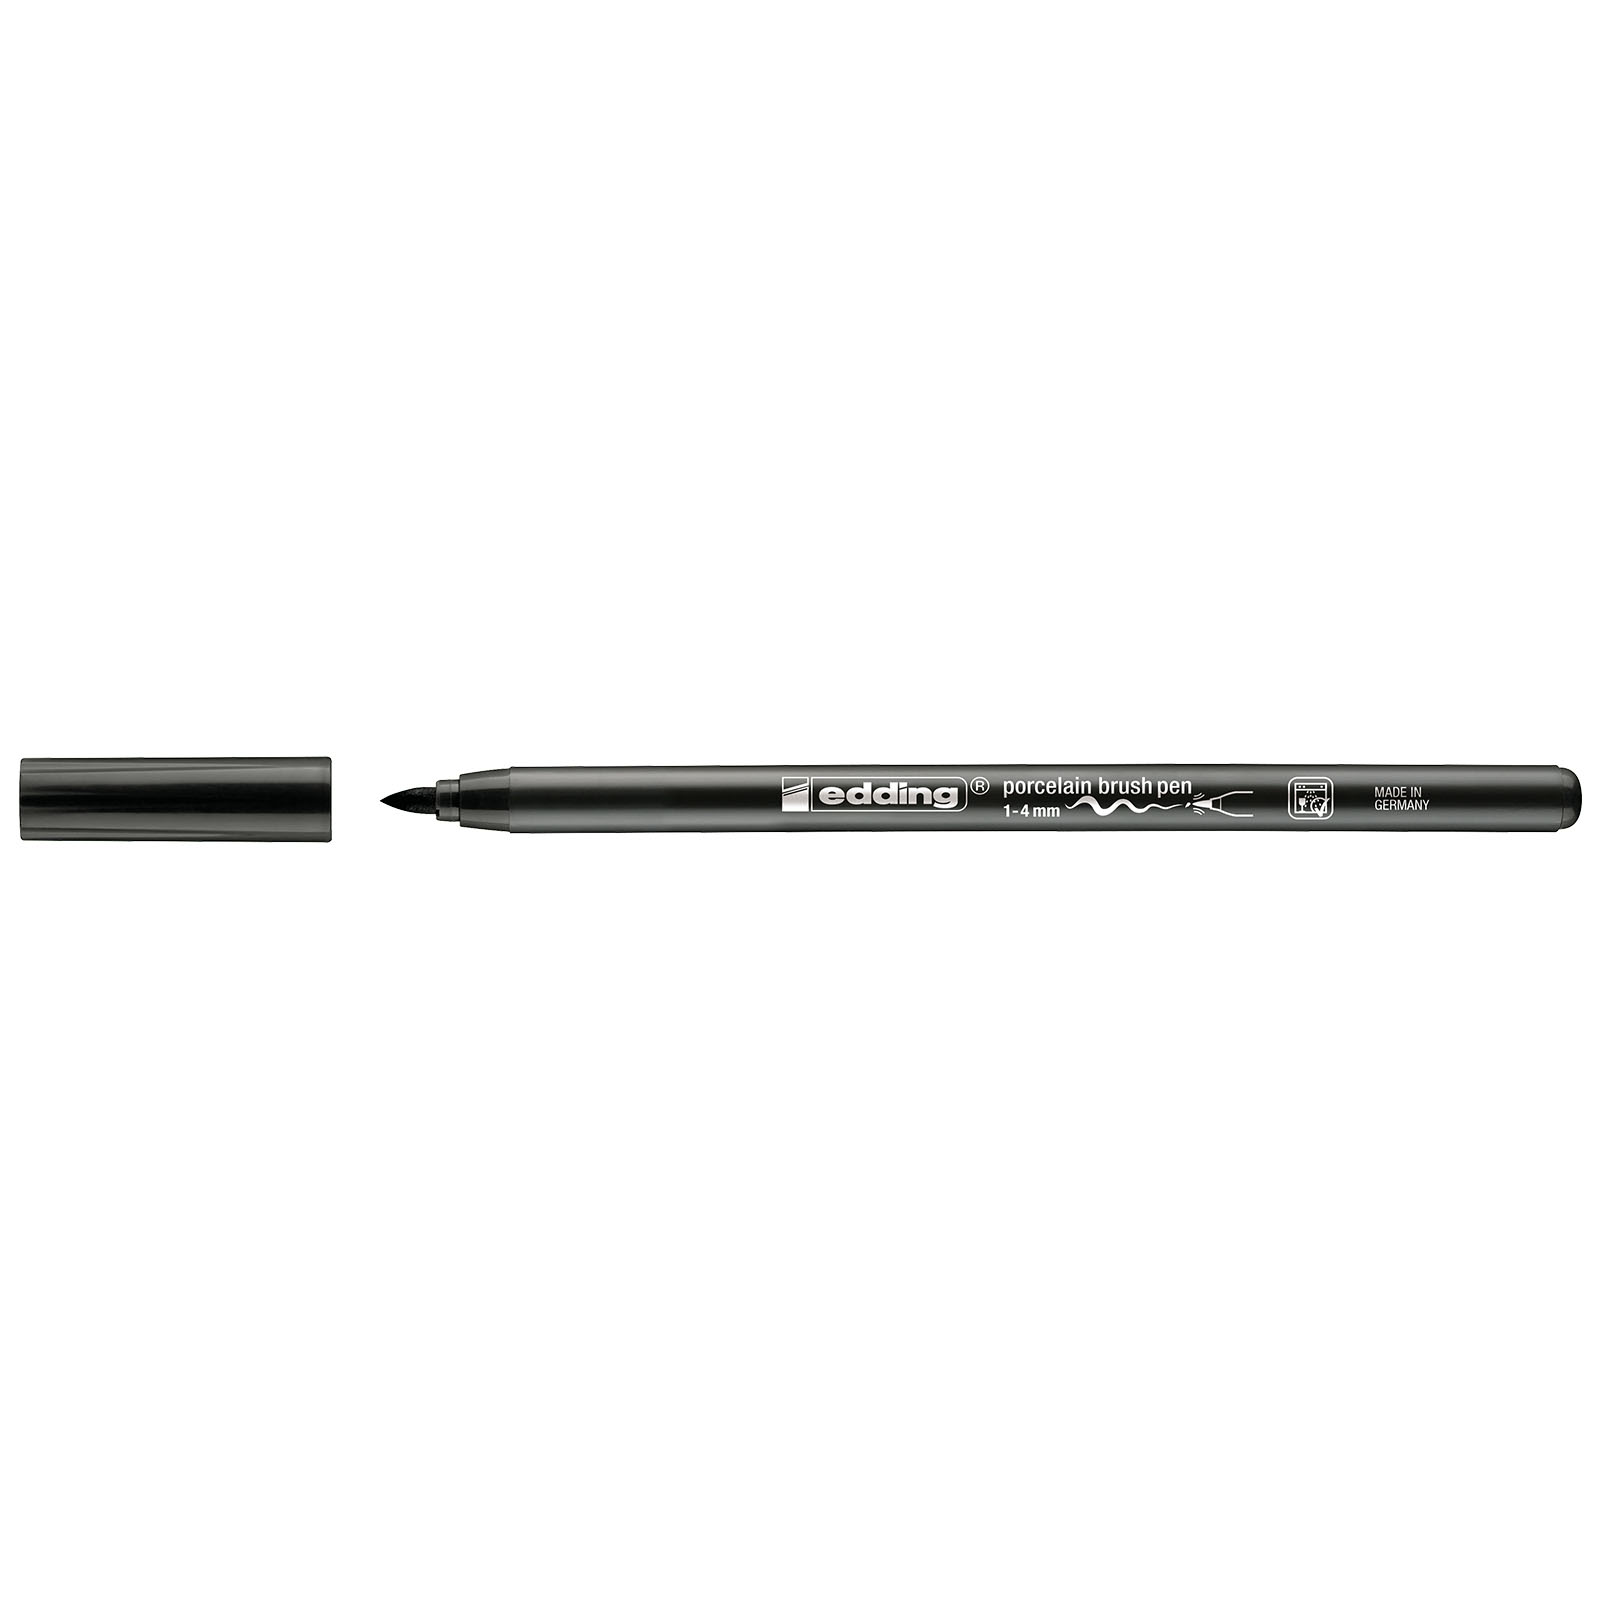 Edding 4200 • Porzellanpinselstift 1-4mm Schwarz